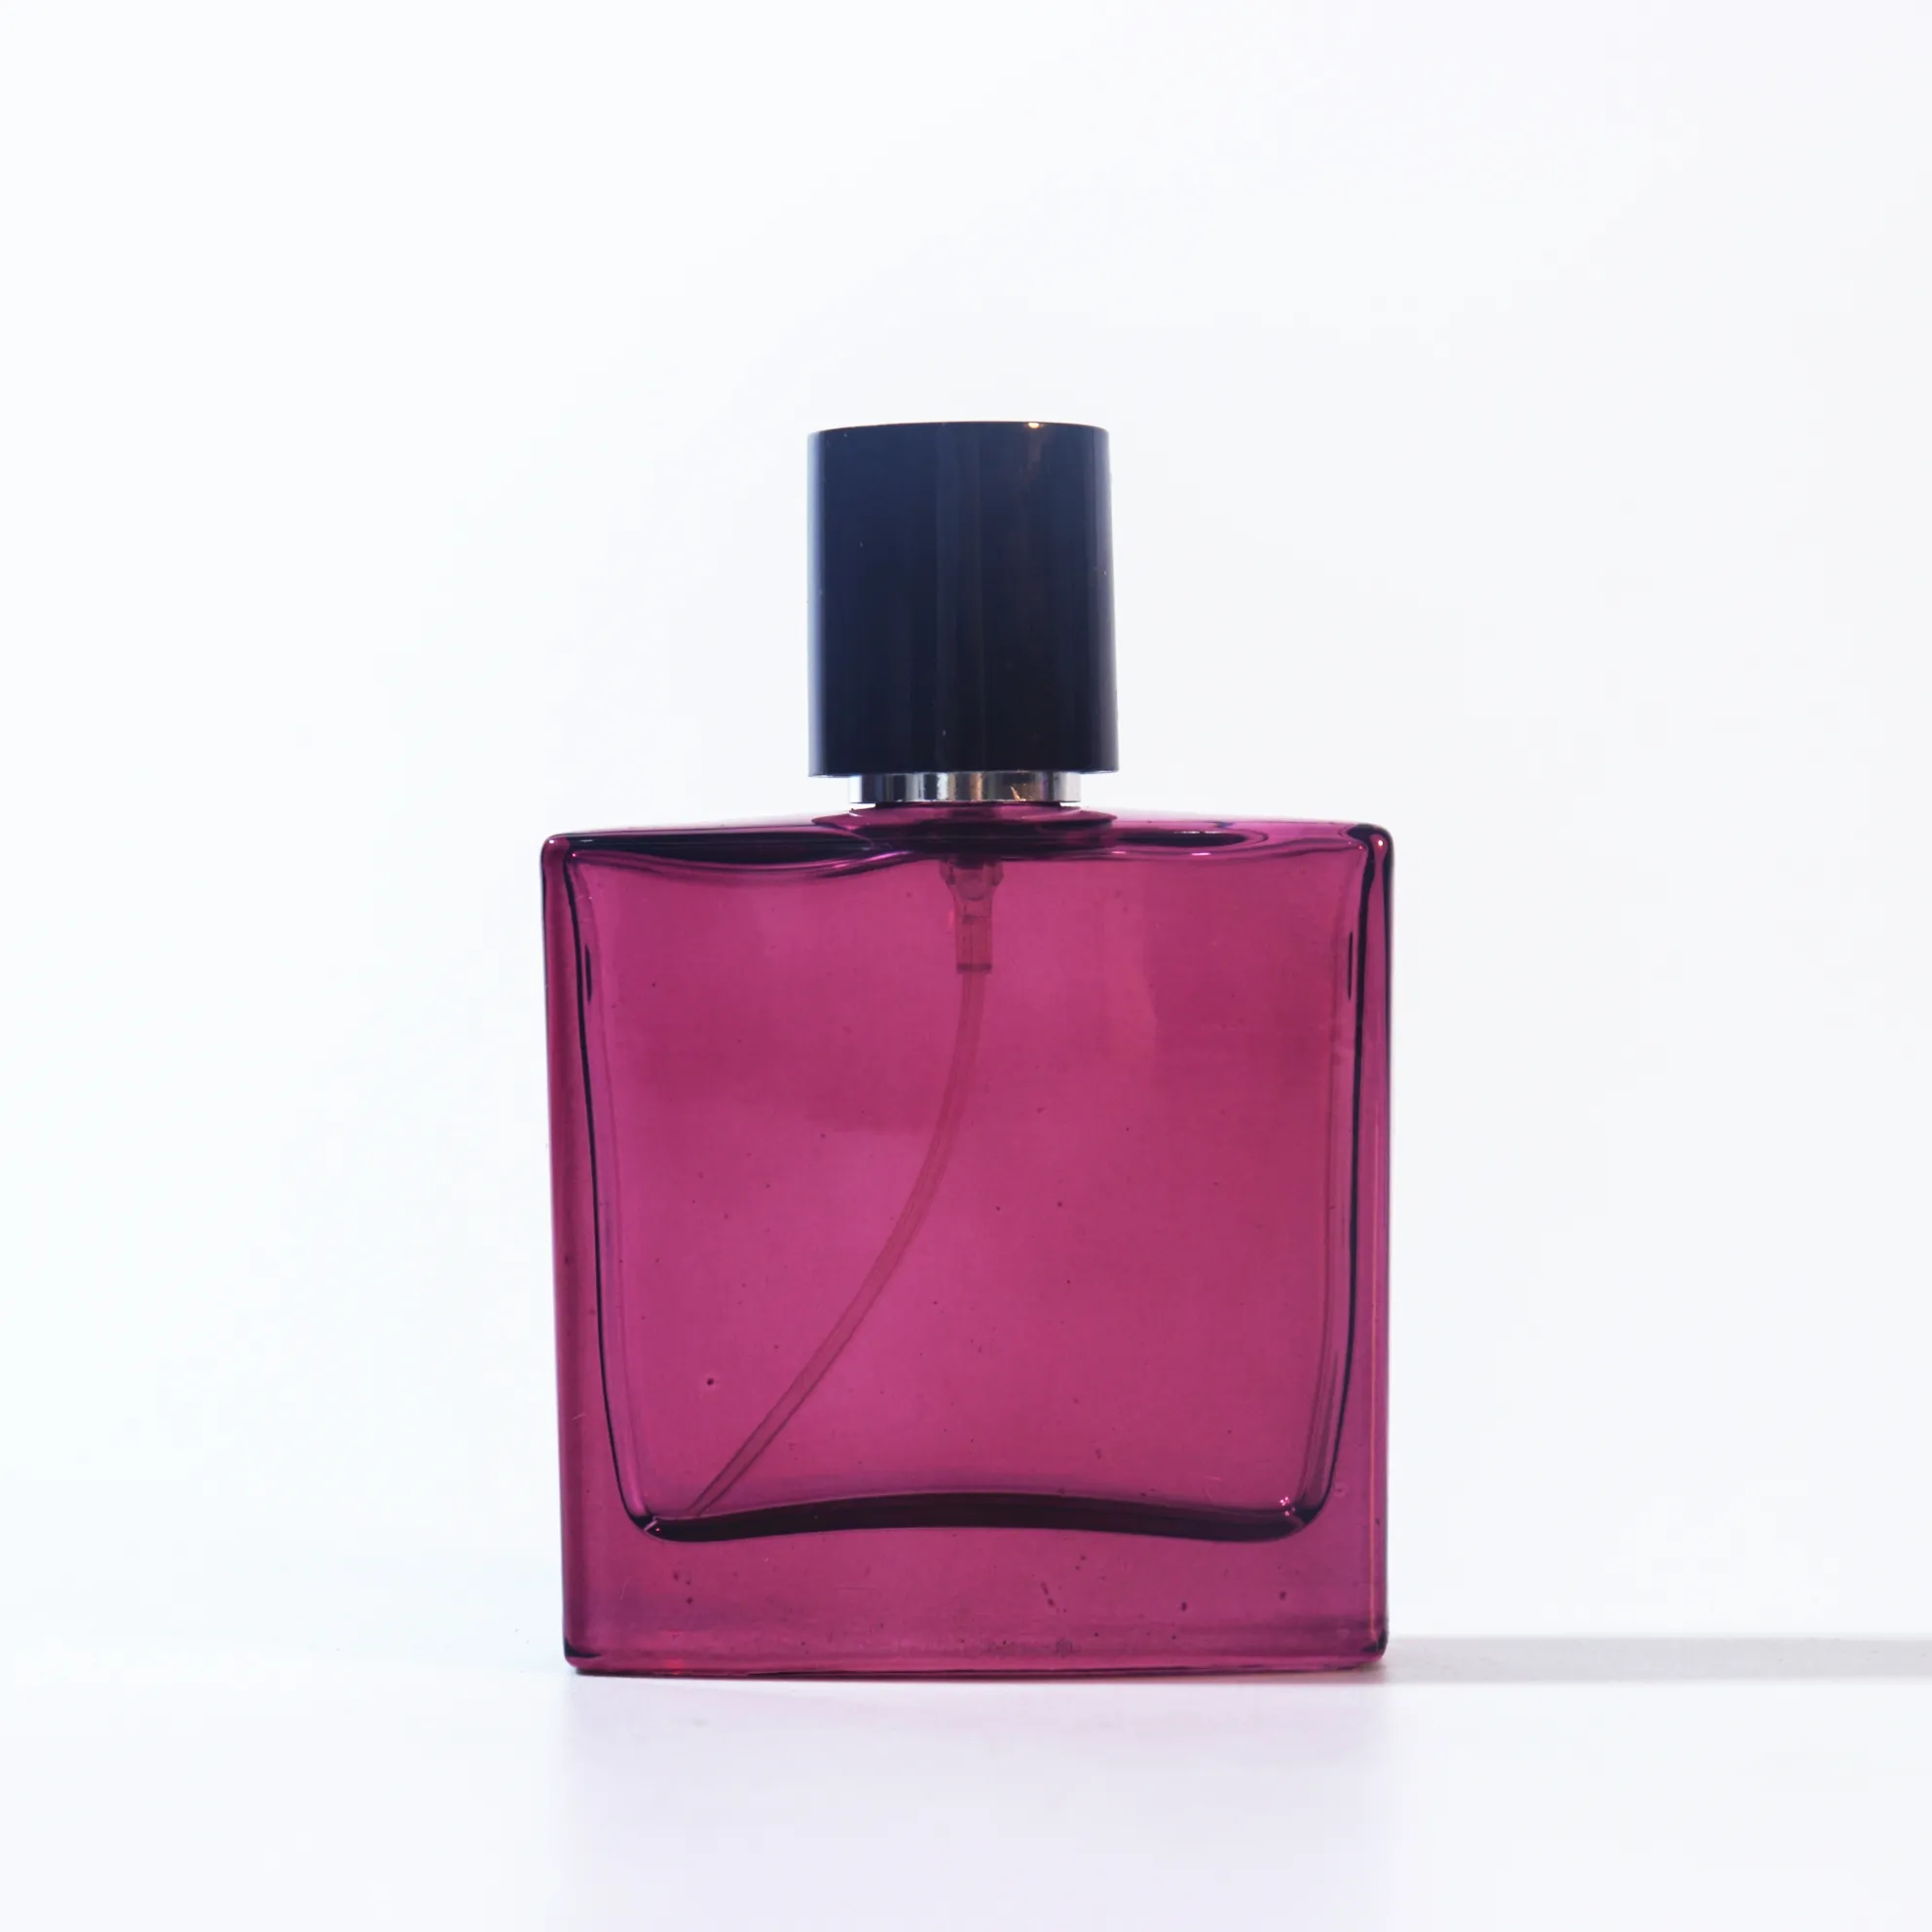 Garrafa de vidro de perfume quadrada 30ml, frasco de vidro colorido vazio com bomba pulverizadora de alumínio